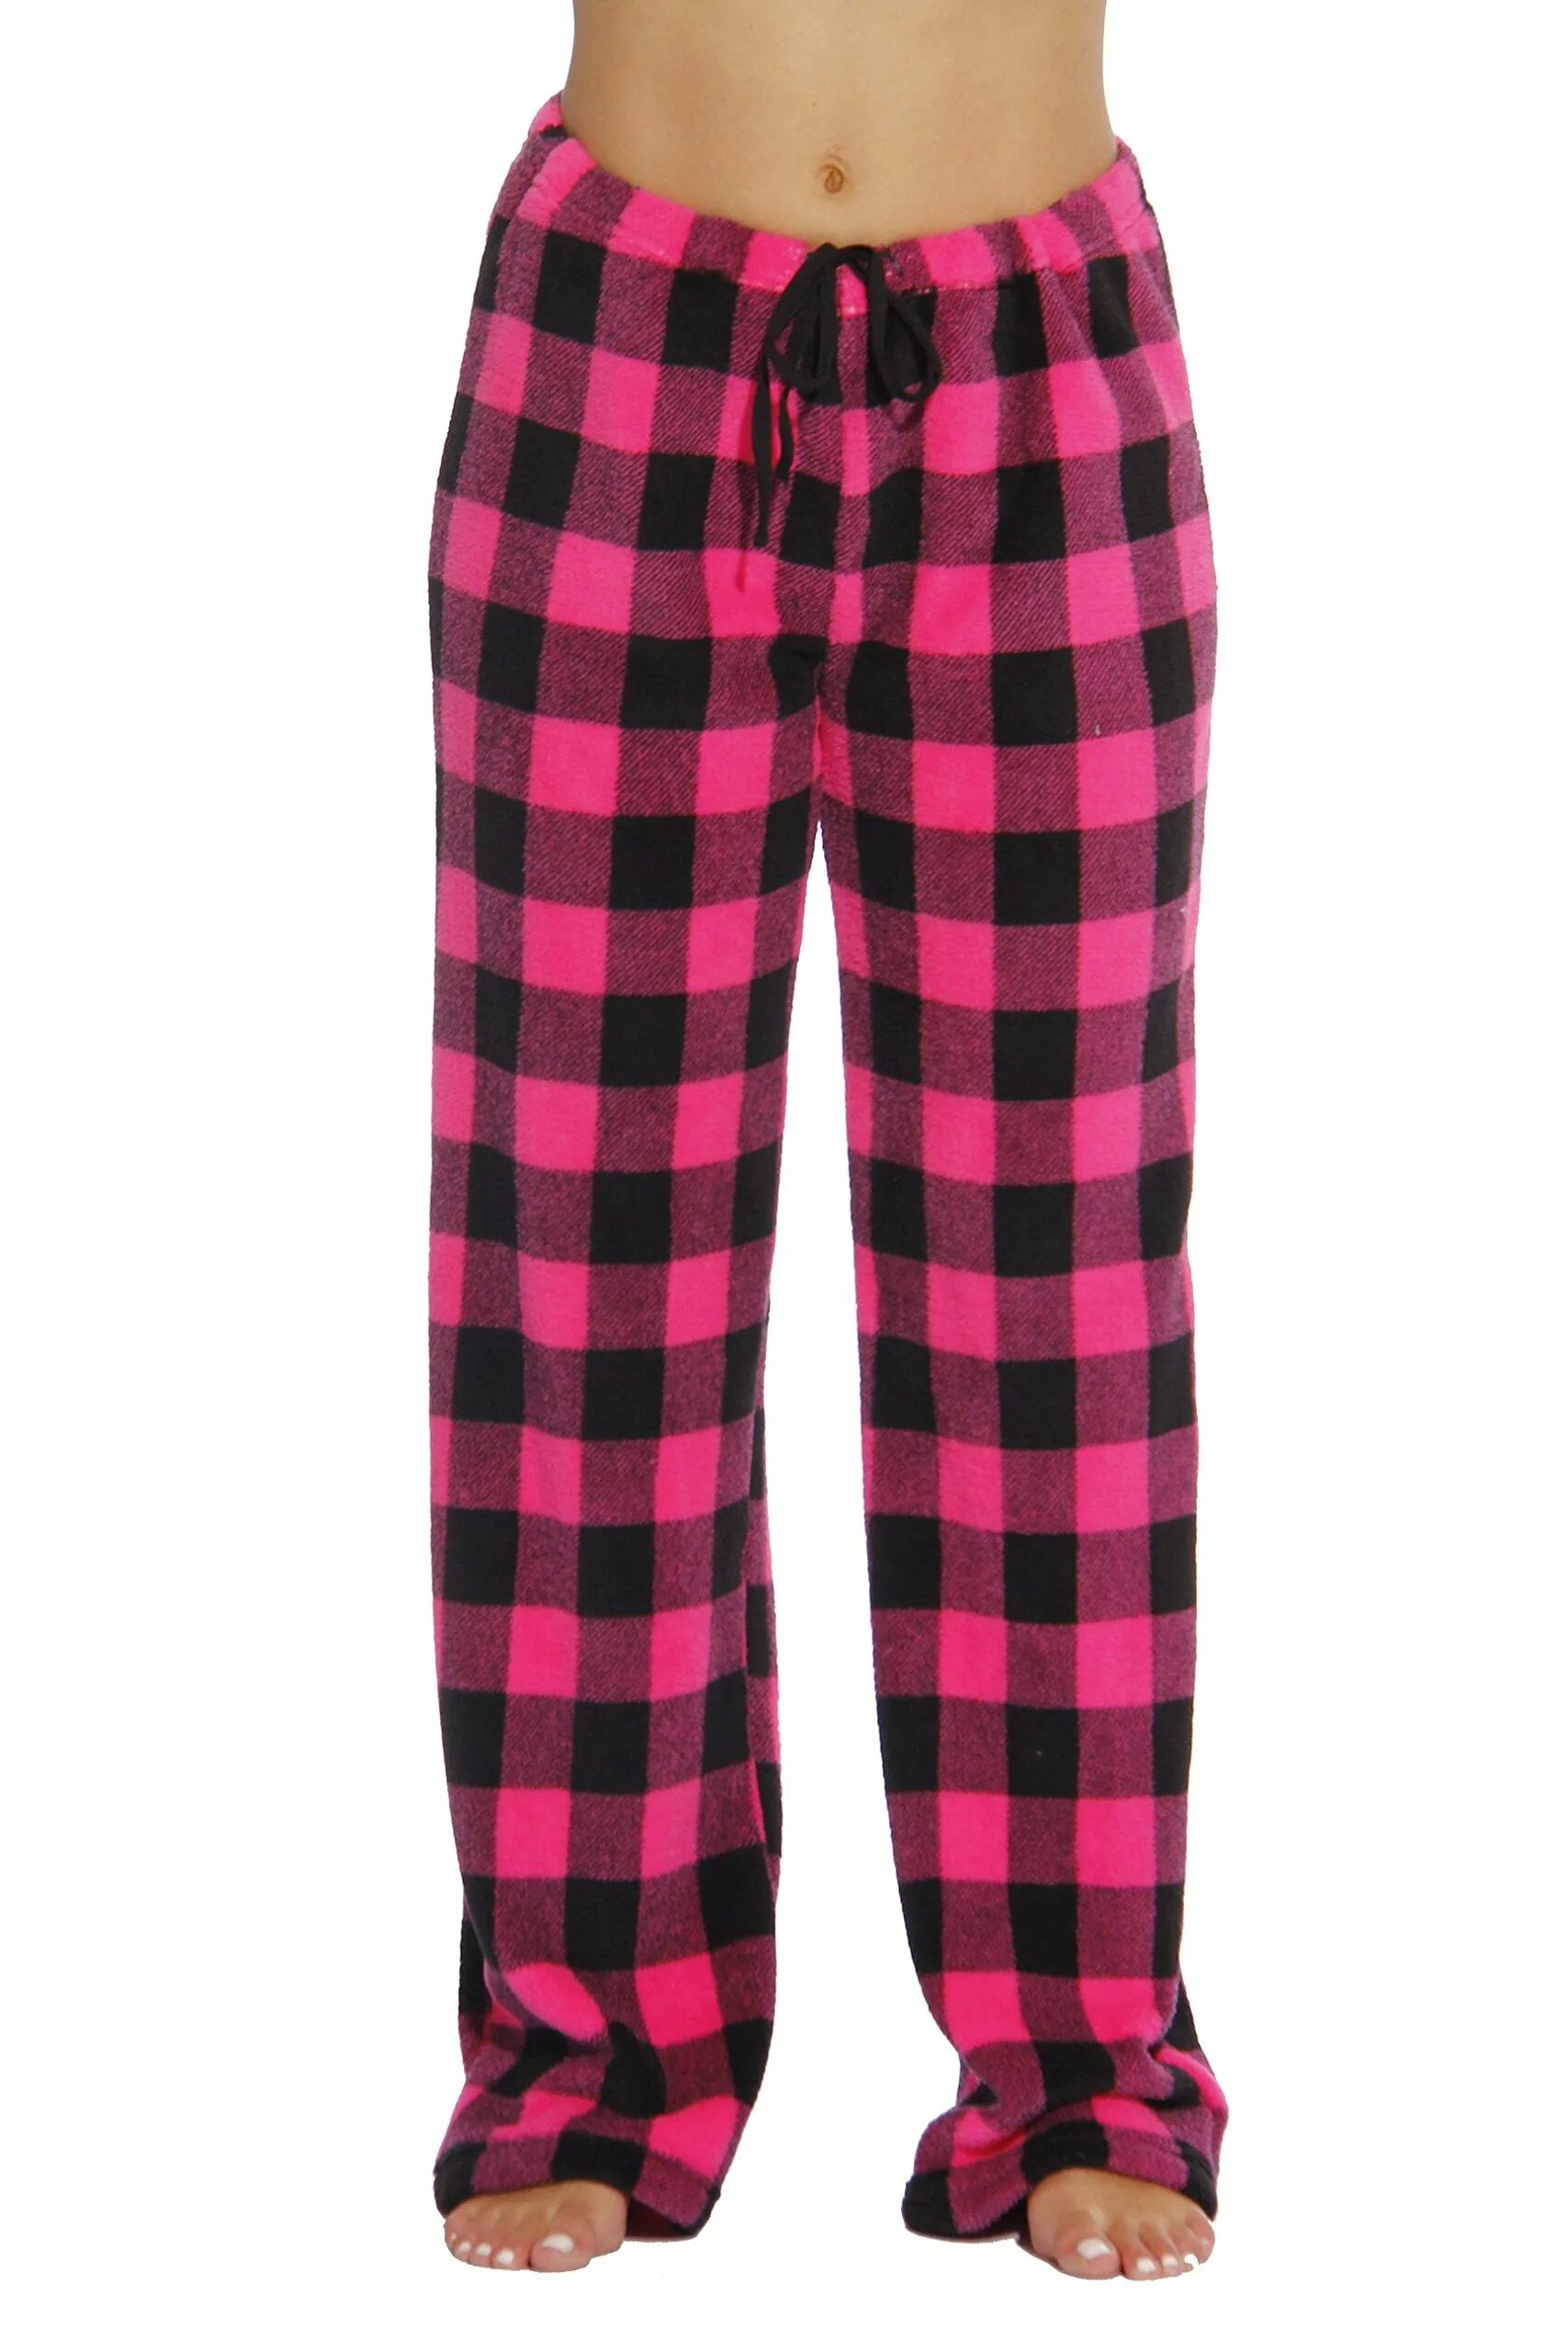 Пижамные штаны в клетку розовые. Розовые пижамные штаны. Фиолетовые пижамные штаны в клетку. Розовые штаны в клетку.